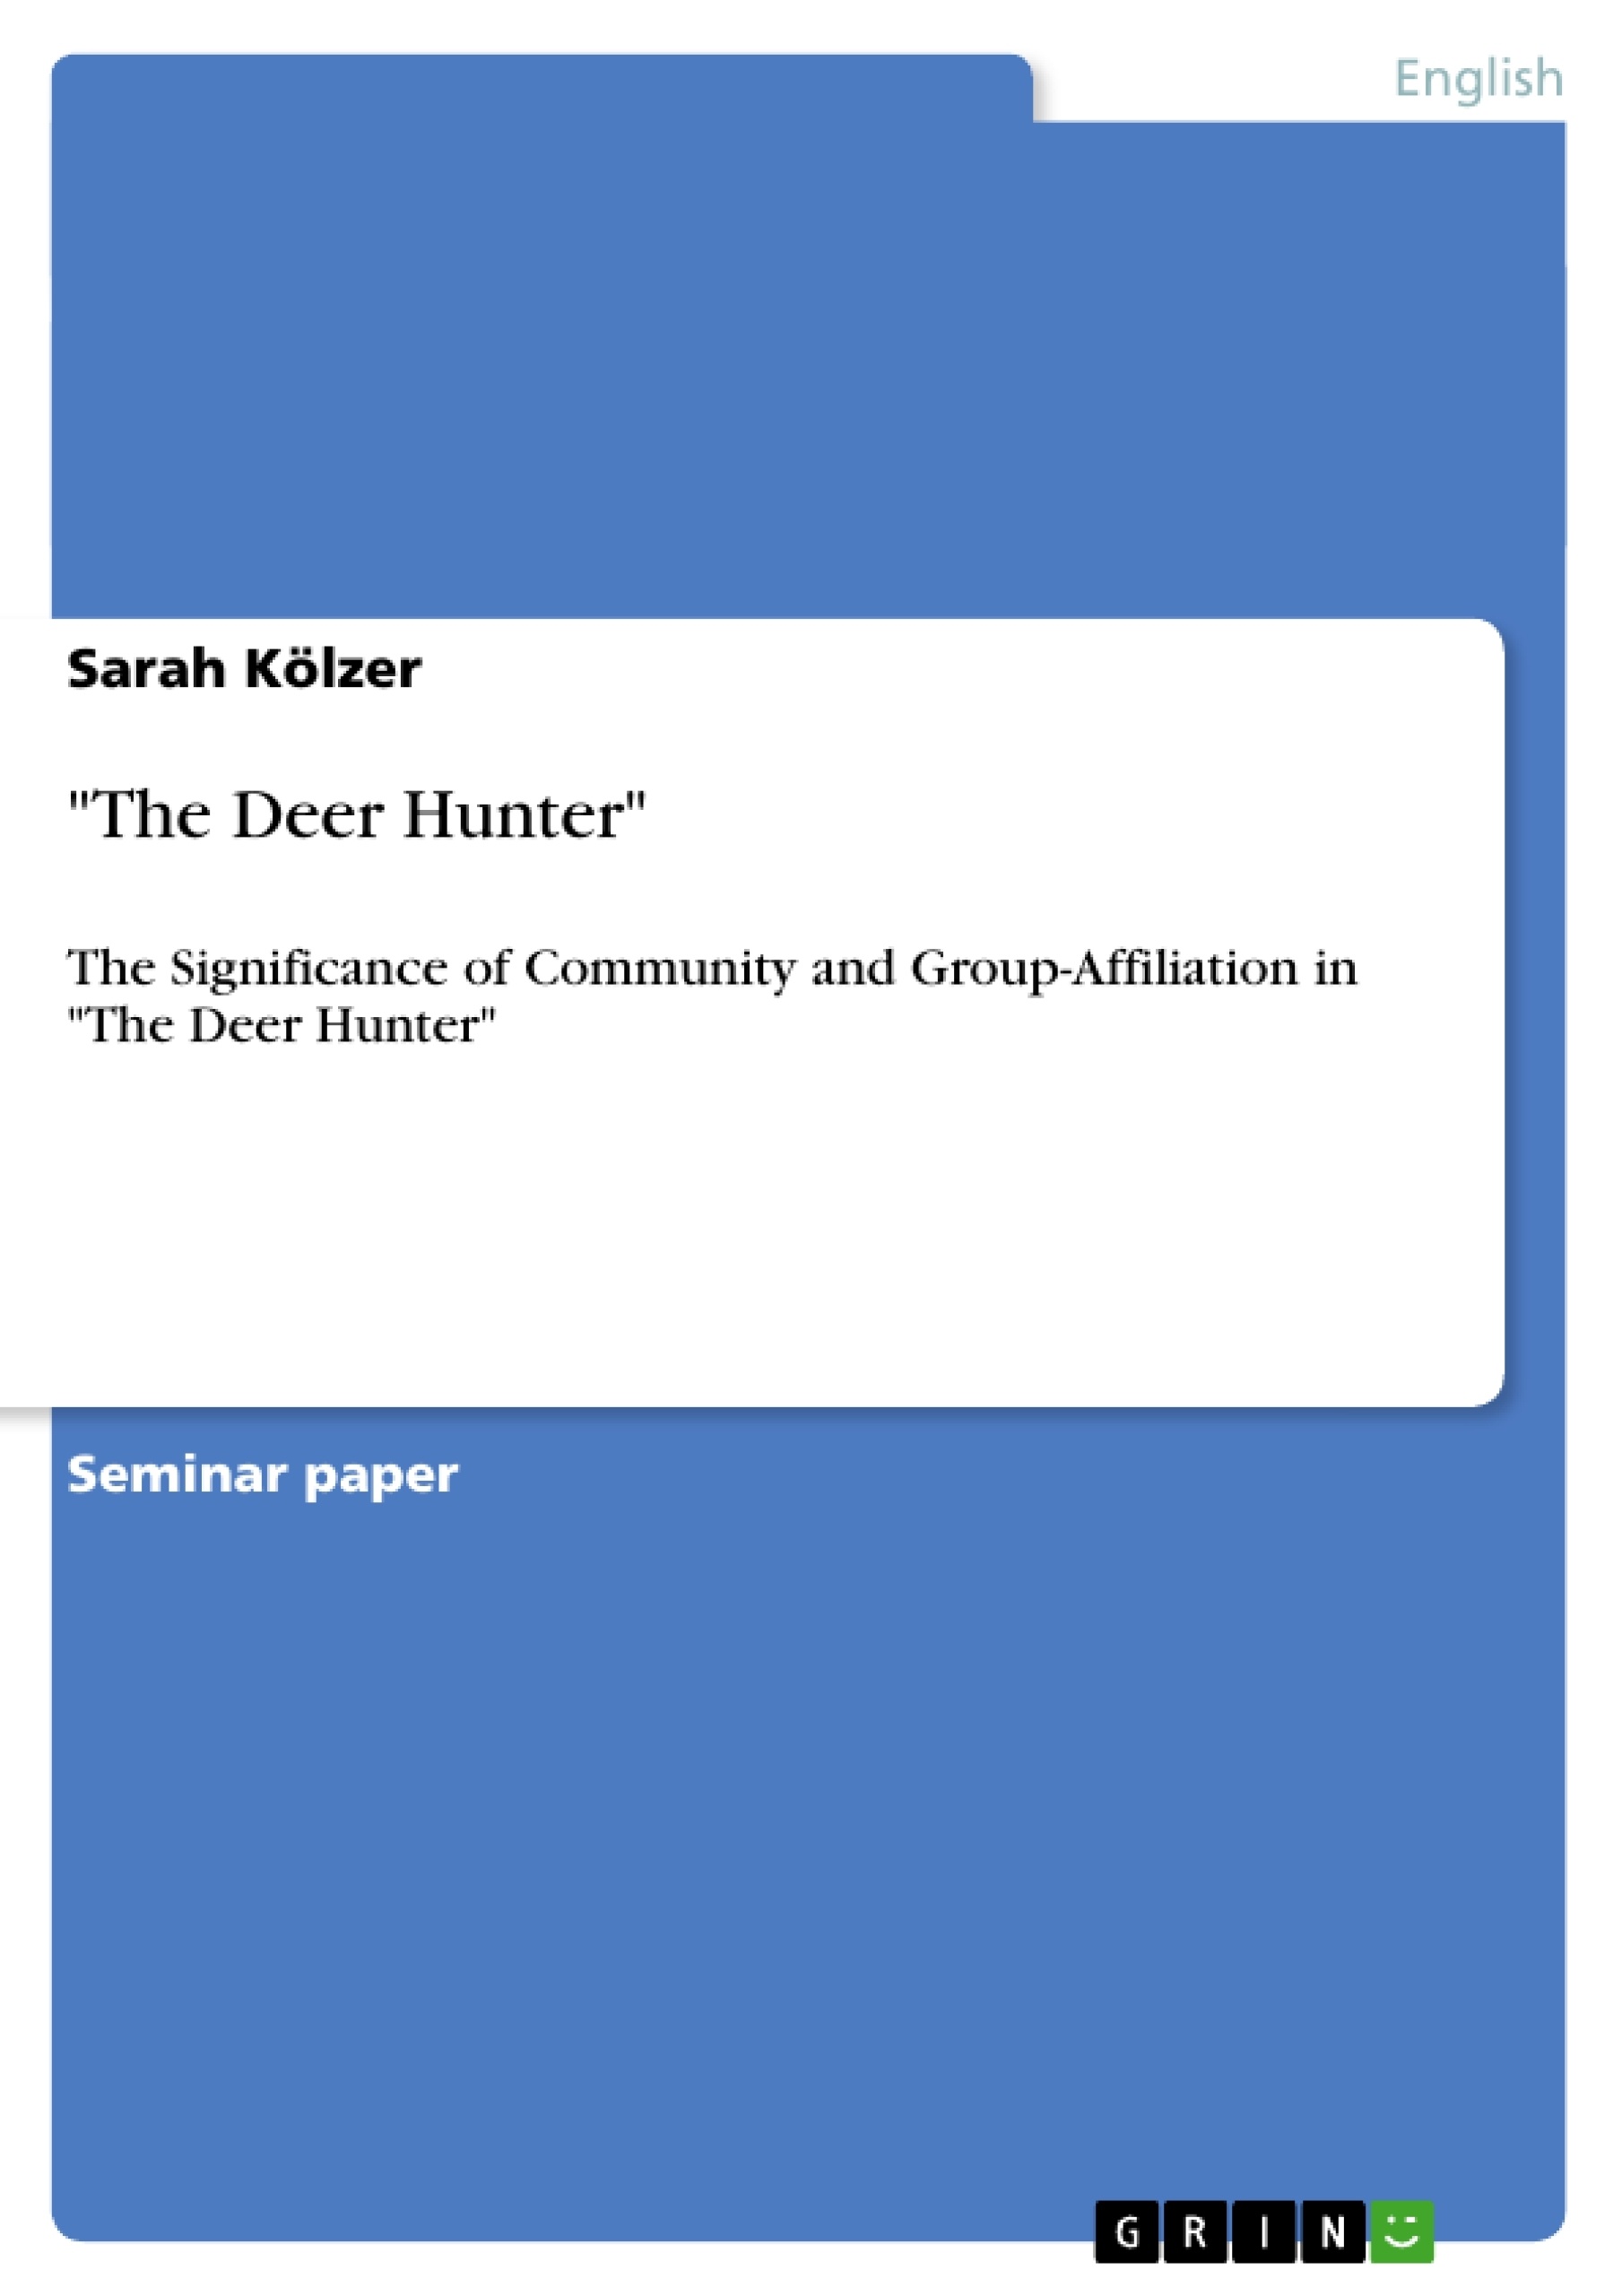 Titre: "The Deer Hunter"